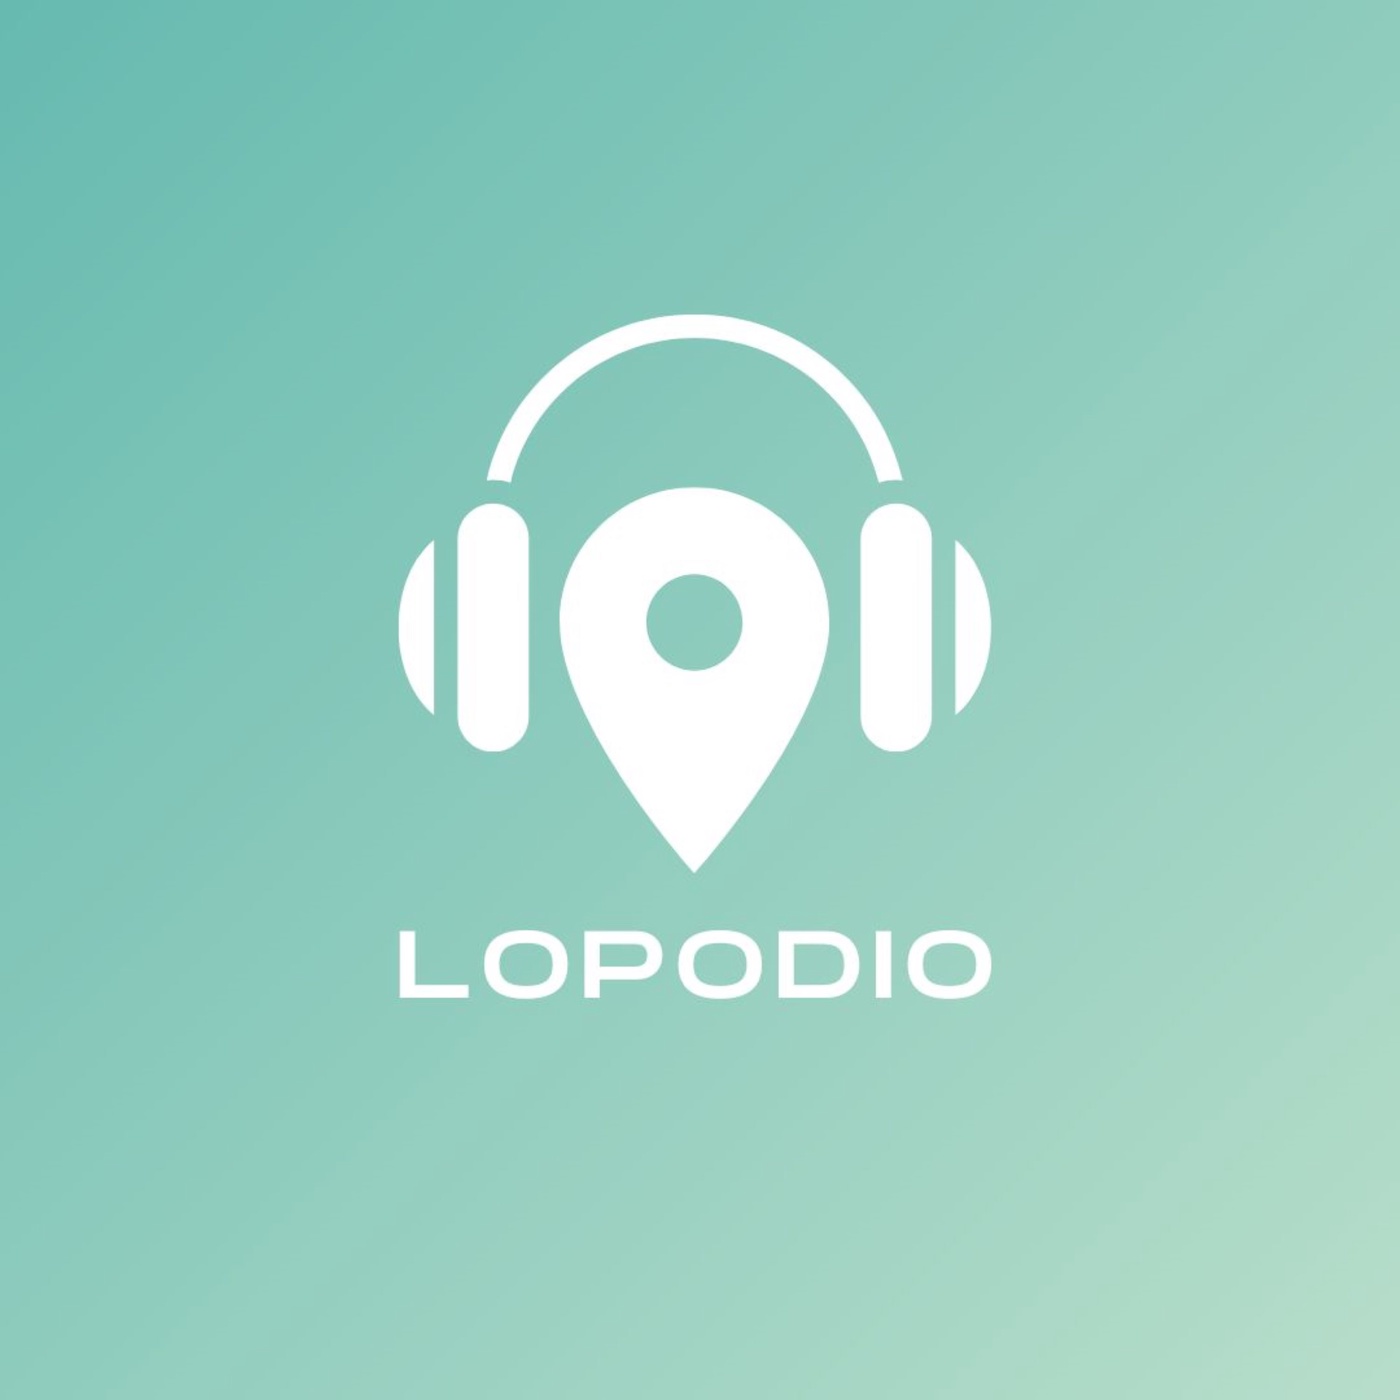 LOPODIO - Deine lokale PodcastApp